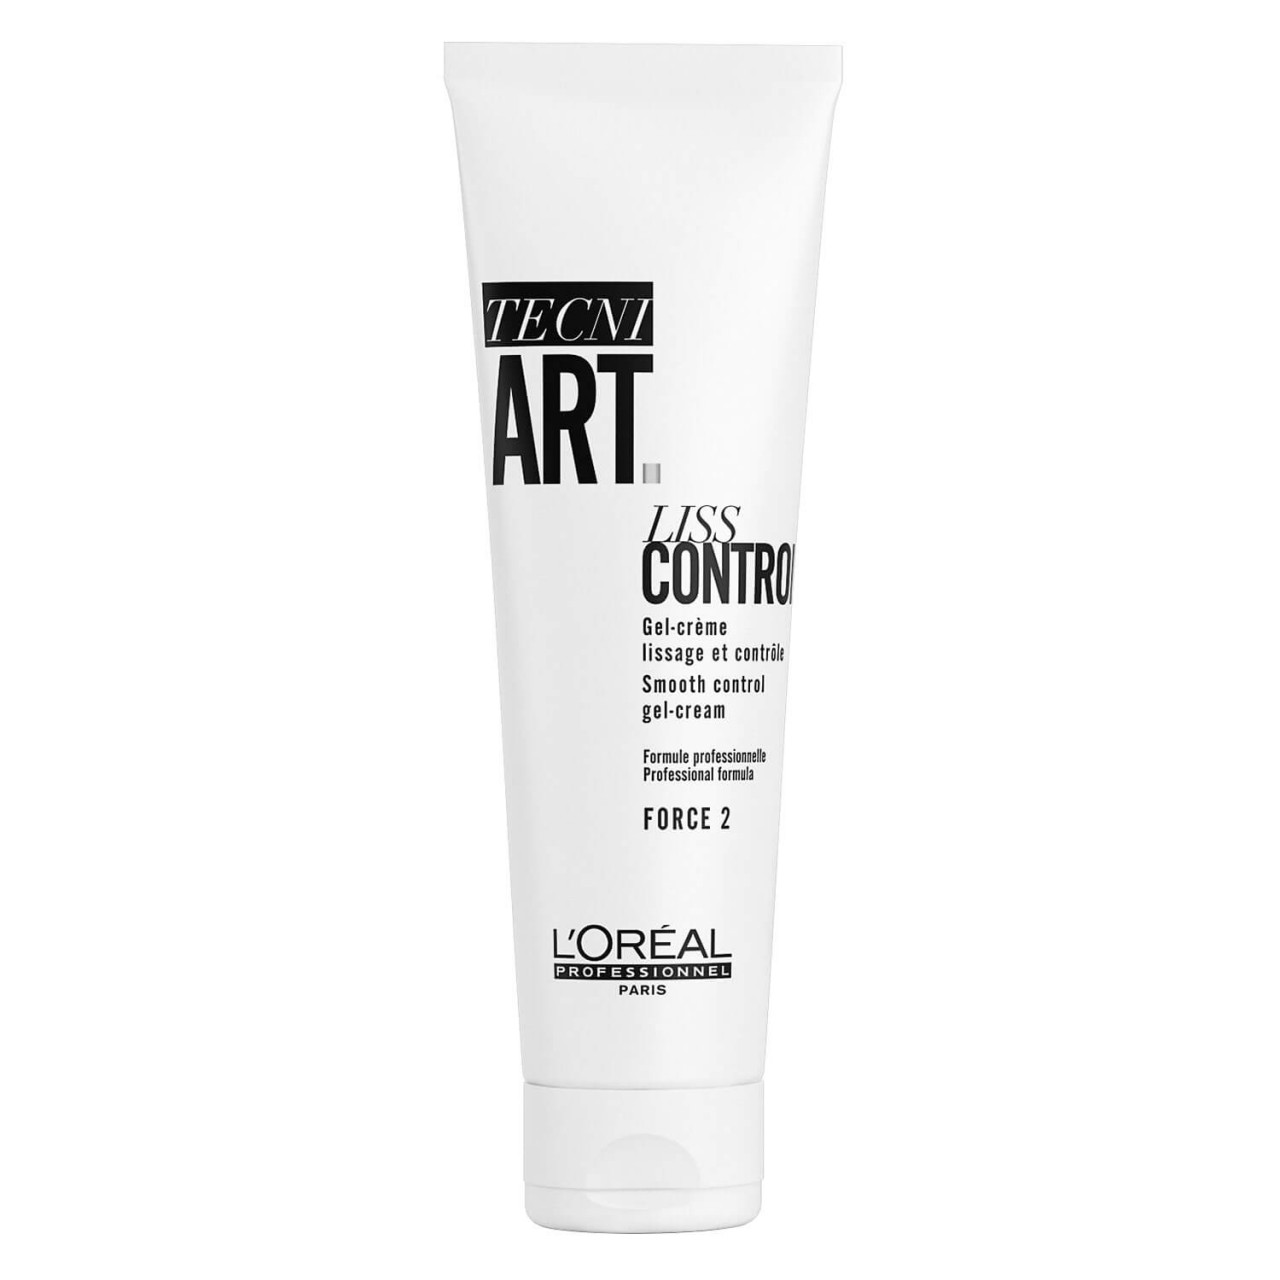 Tecni.art Essentials - Liss Control von L'Oréal Professionnel